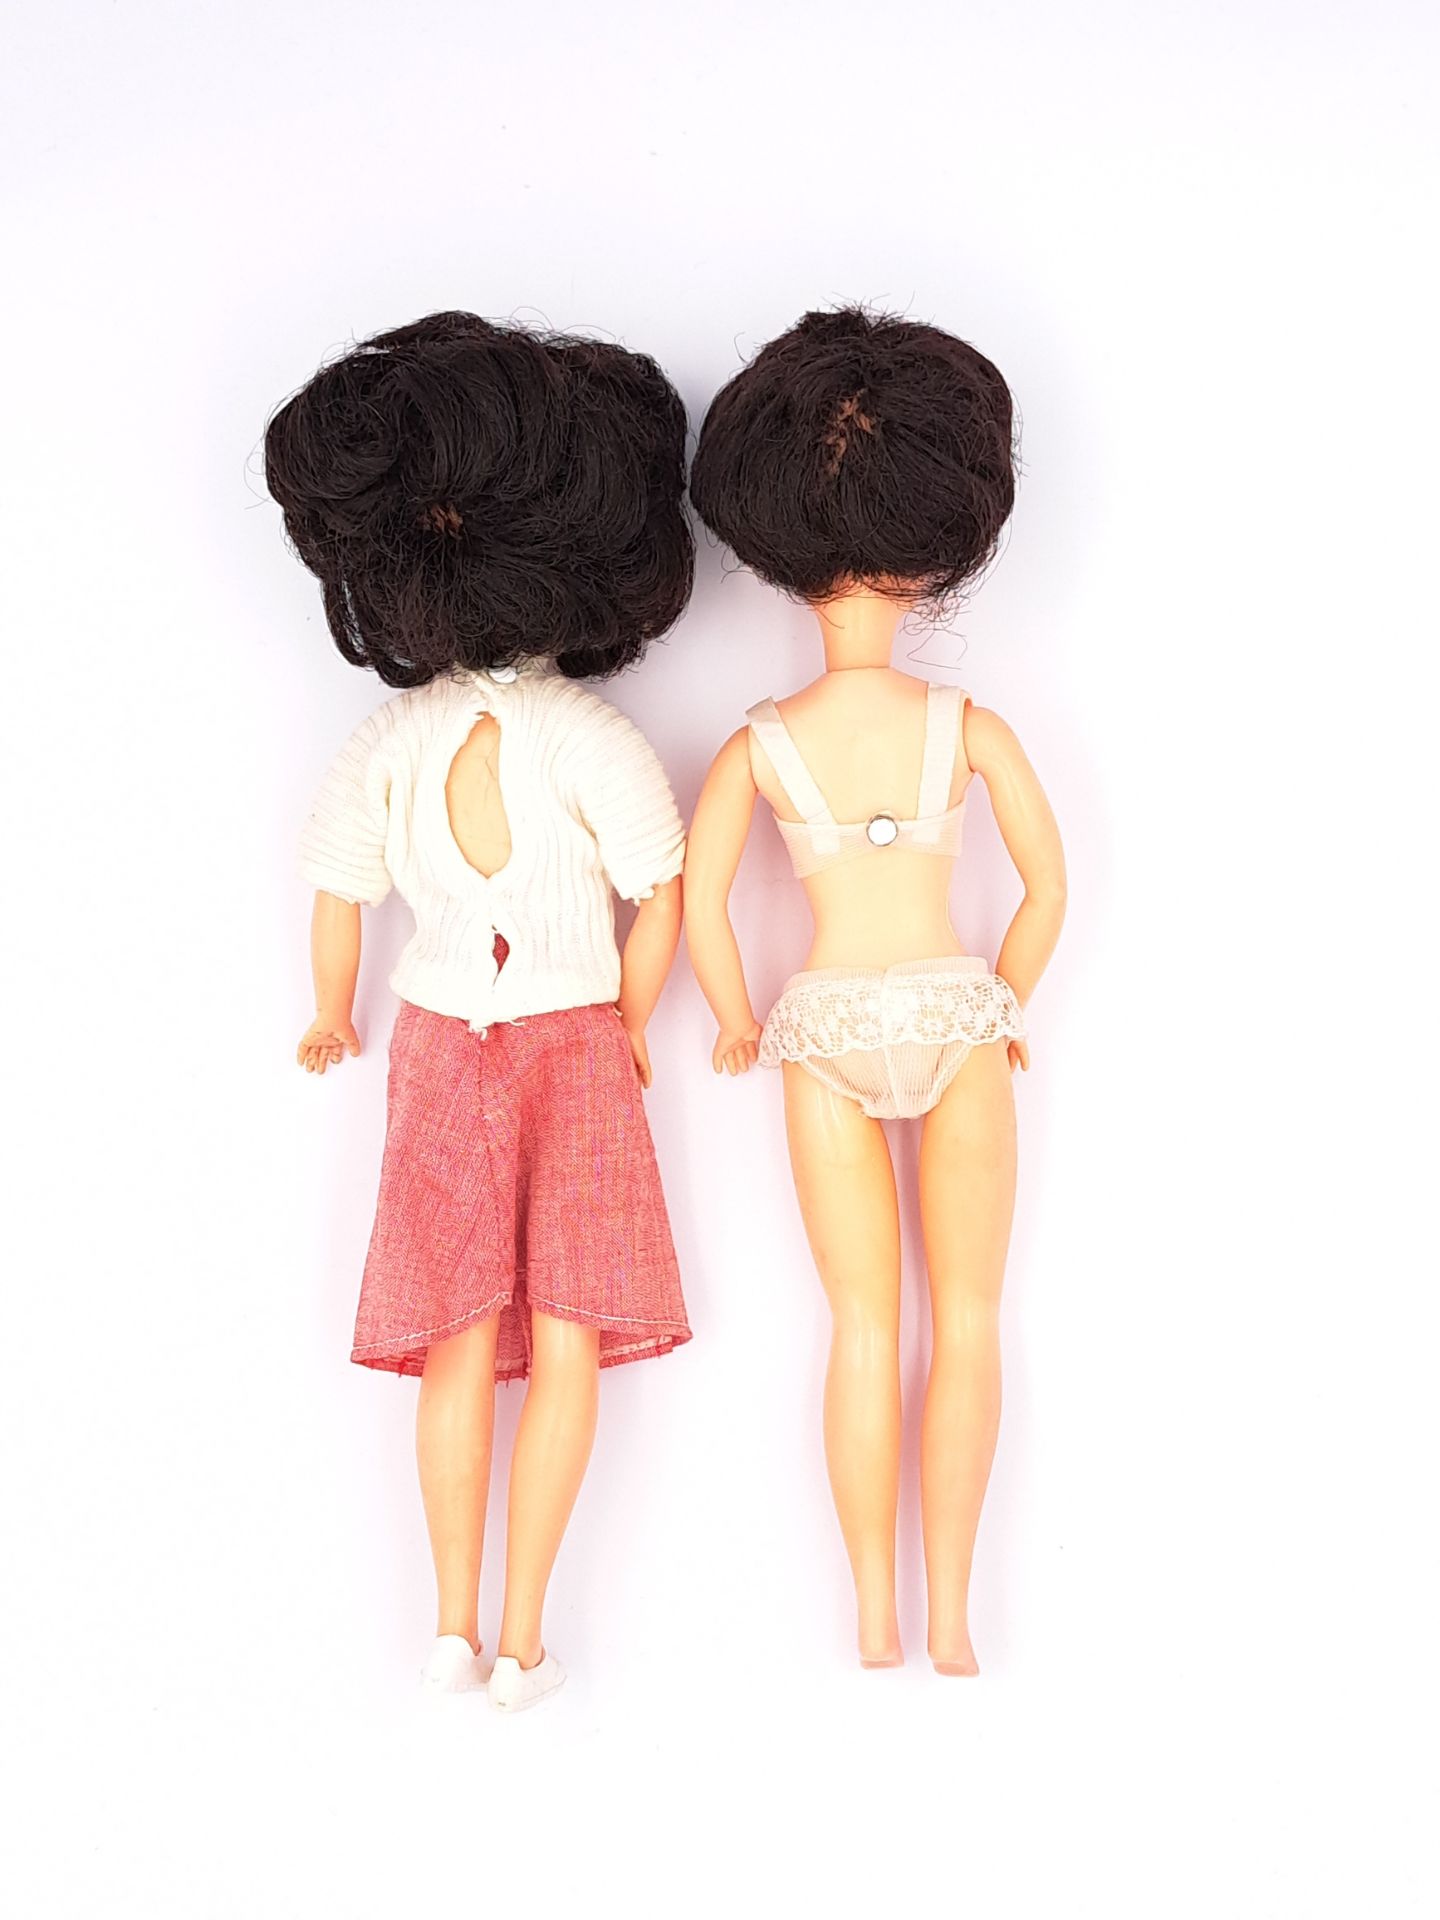 Pedigree mini Sindy pair of vintage brunette dolls, 1966 - Image 2 of 4